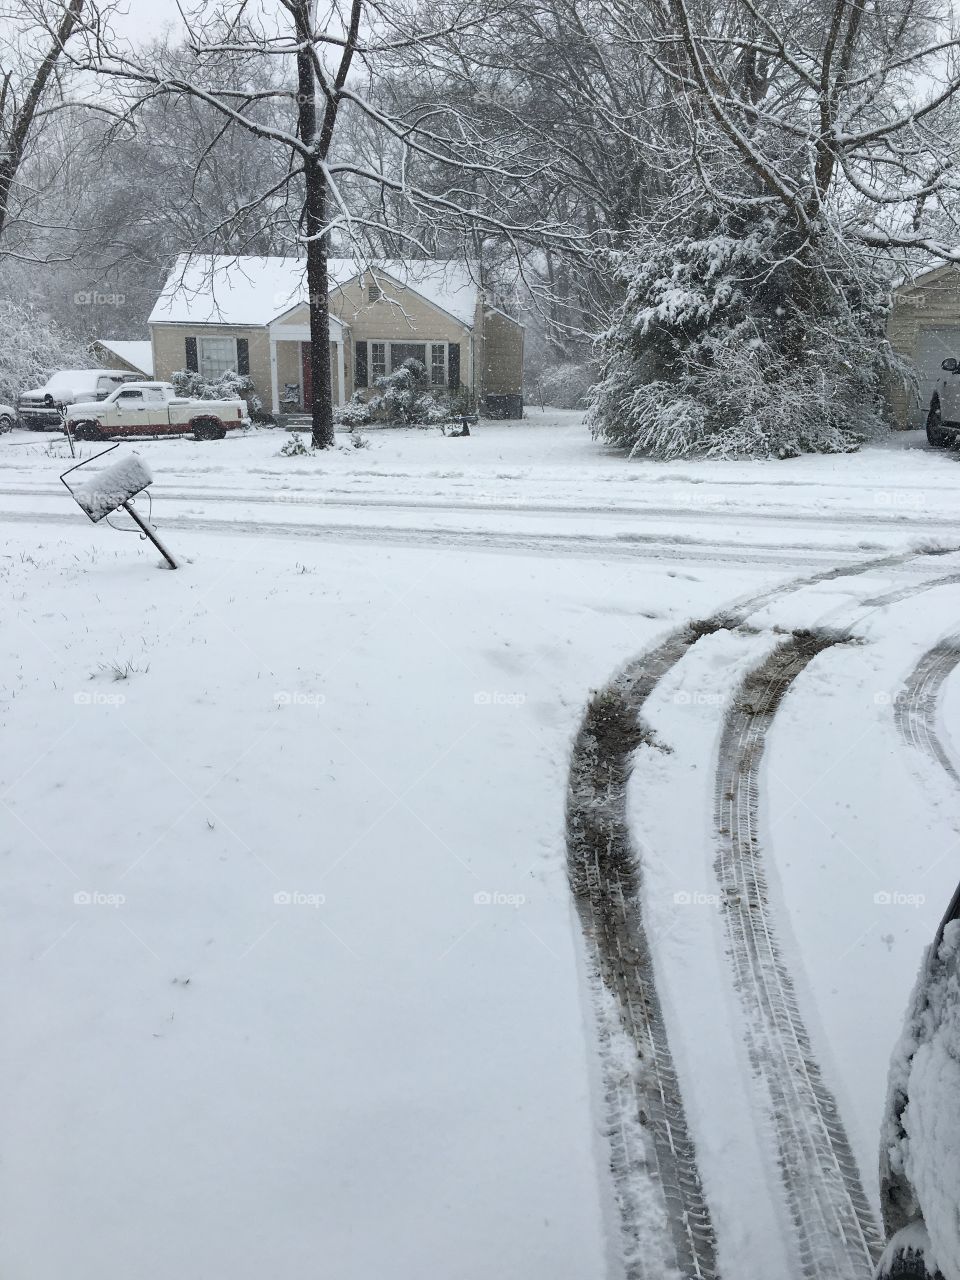 Snowy driveway.